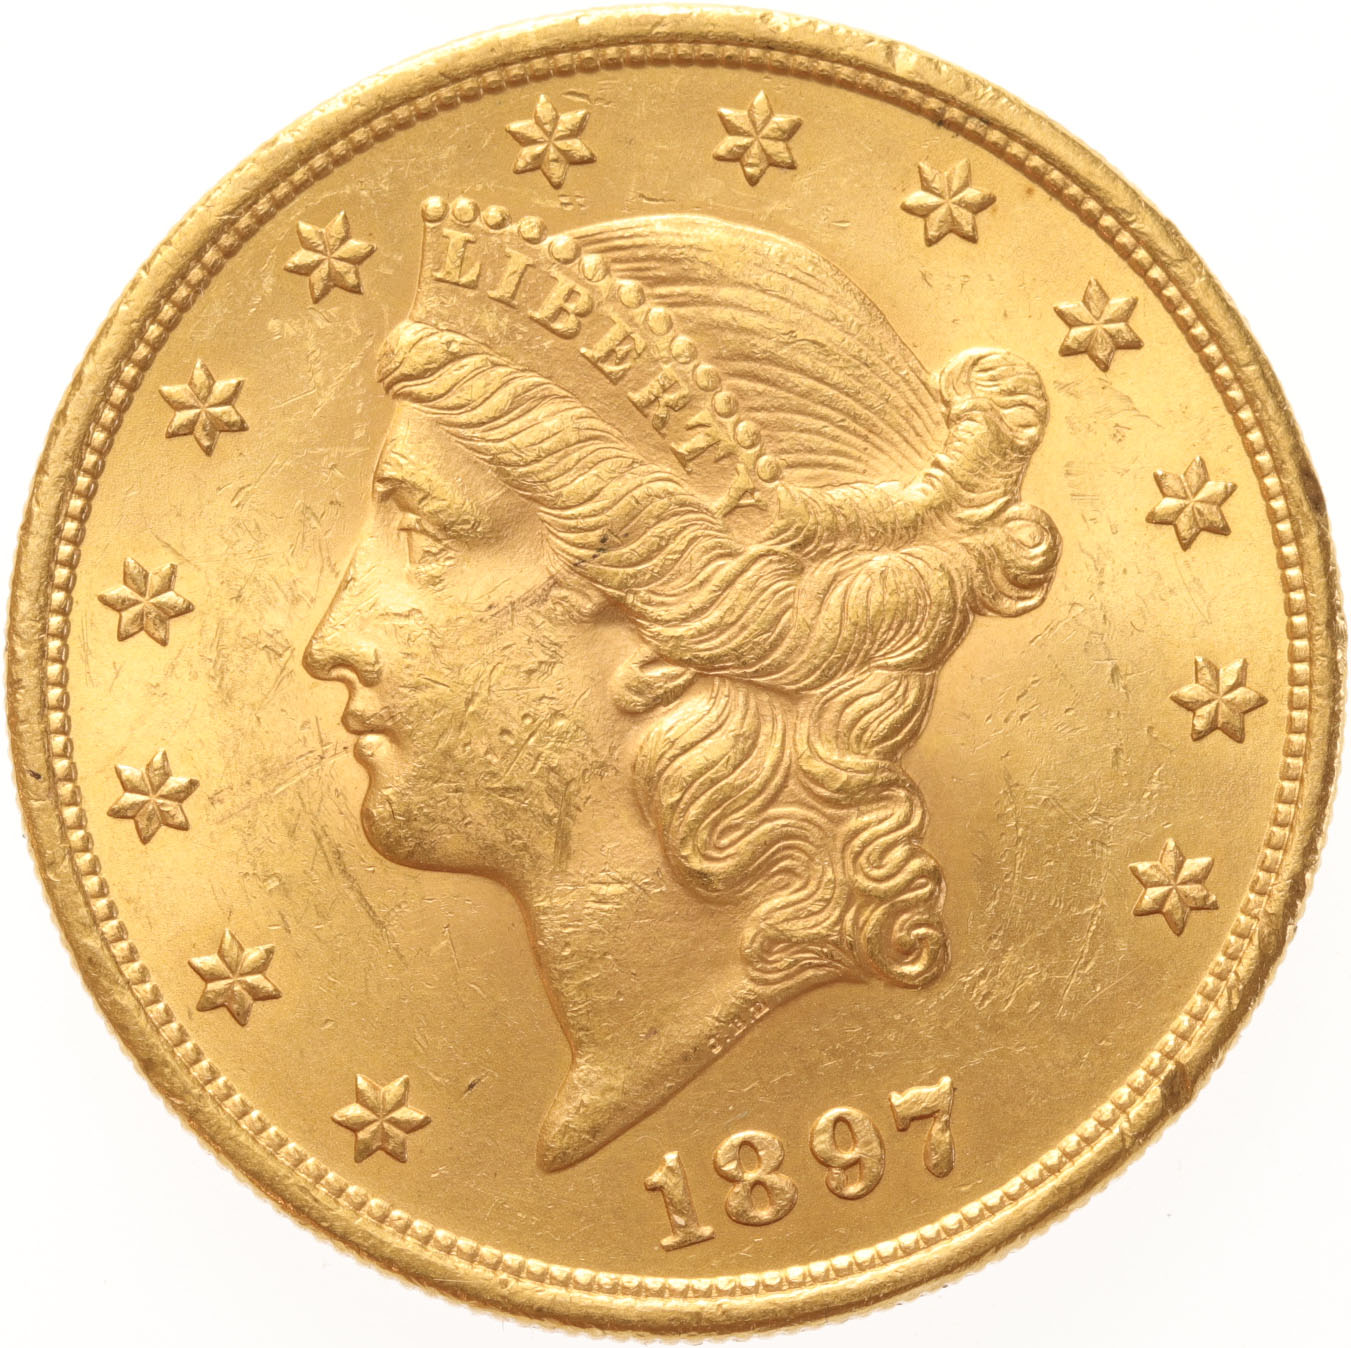 USA 20 Dollars 1897